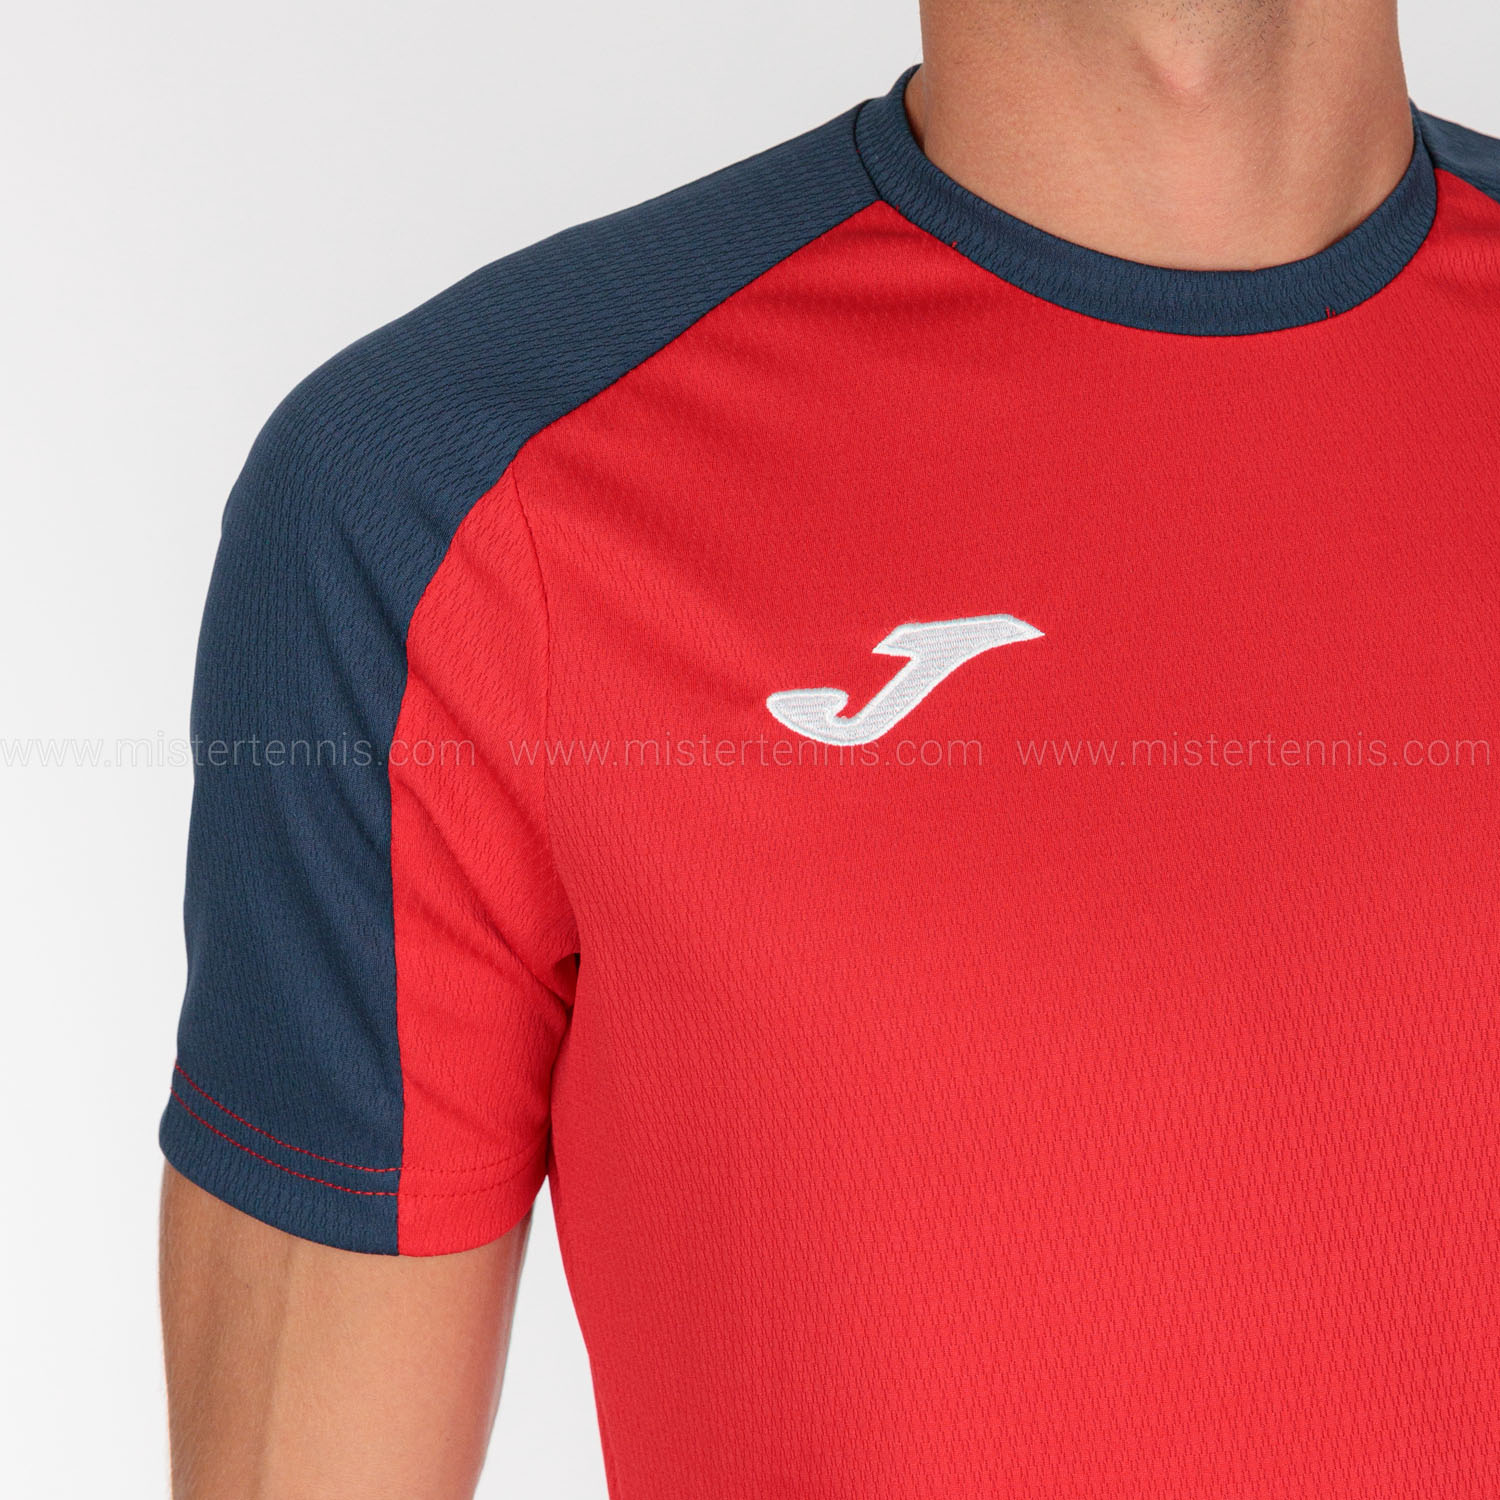 Joma Eco Championship T-Shirt - Red/Navy